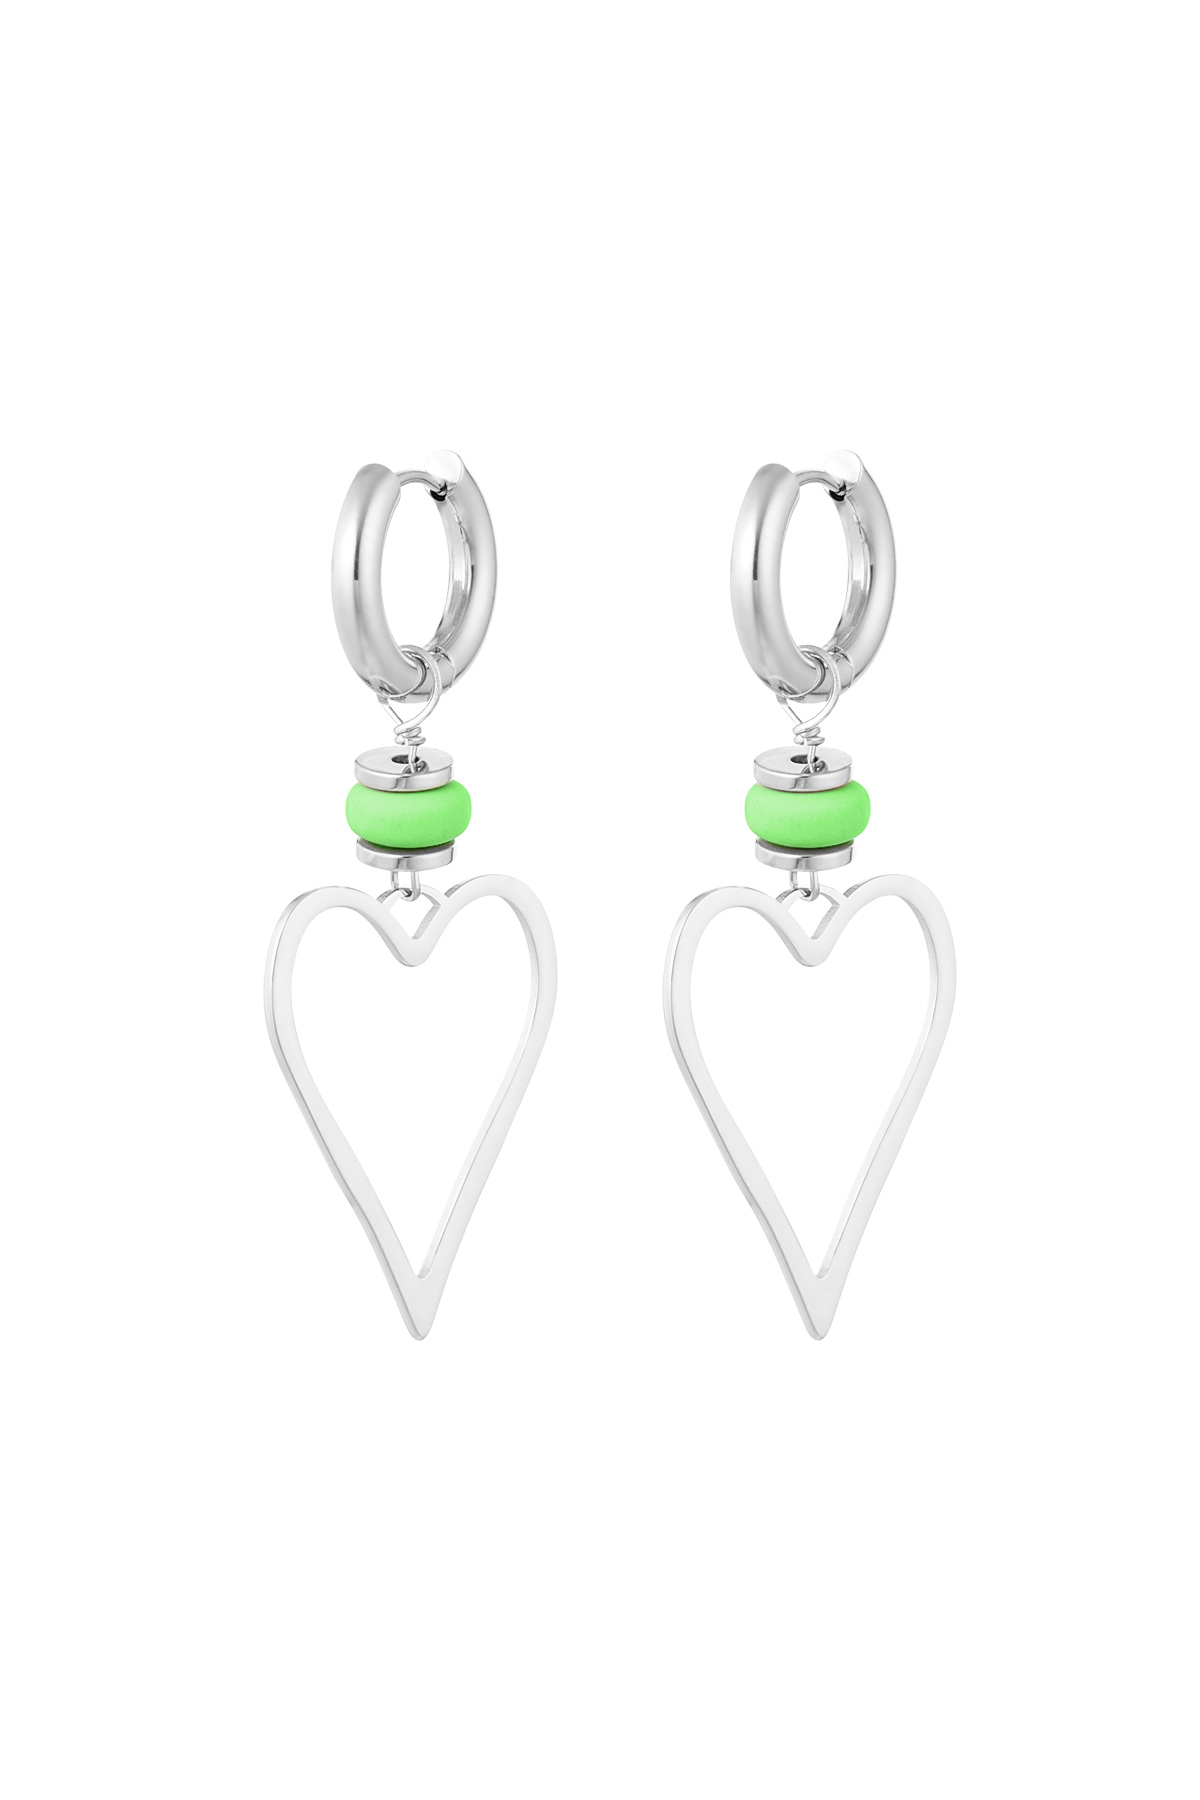 Earrings heart with bead - silver/green